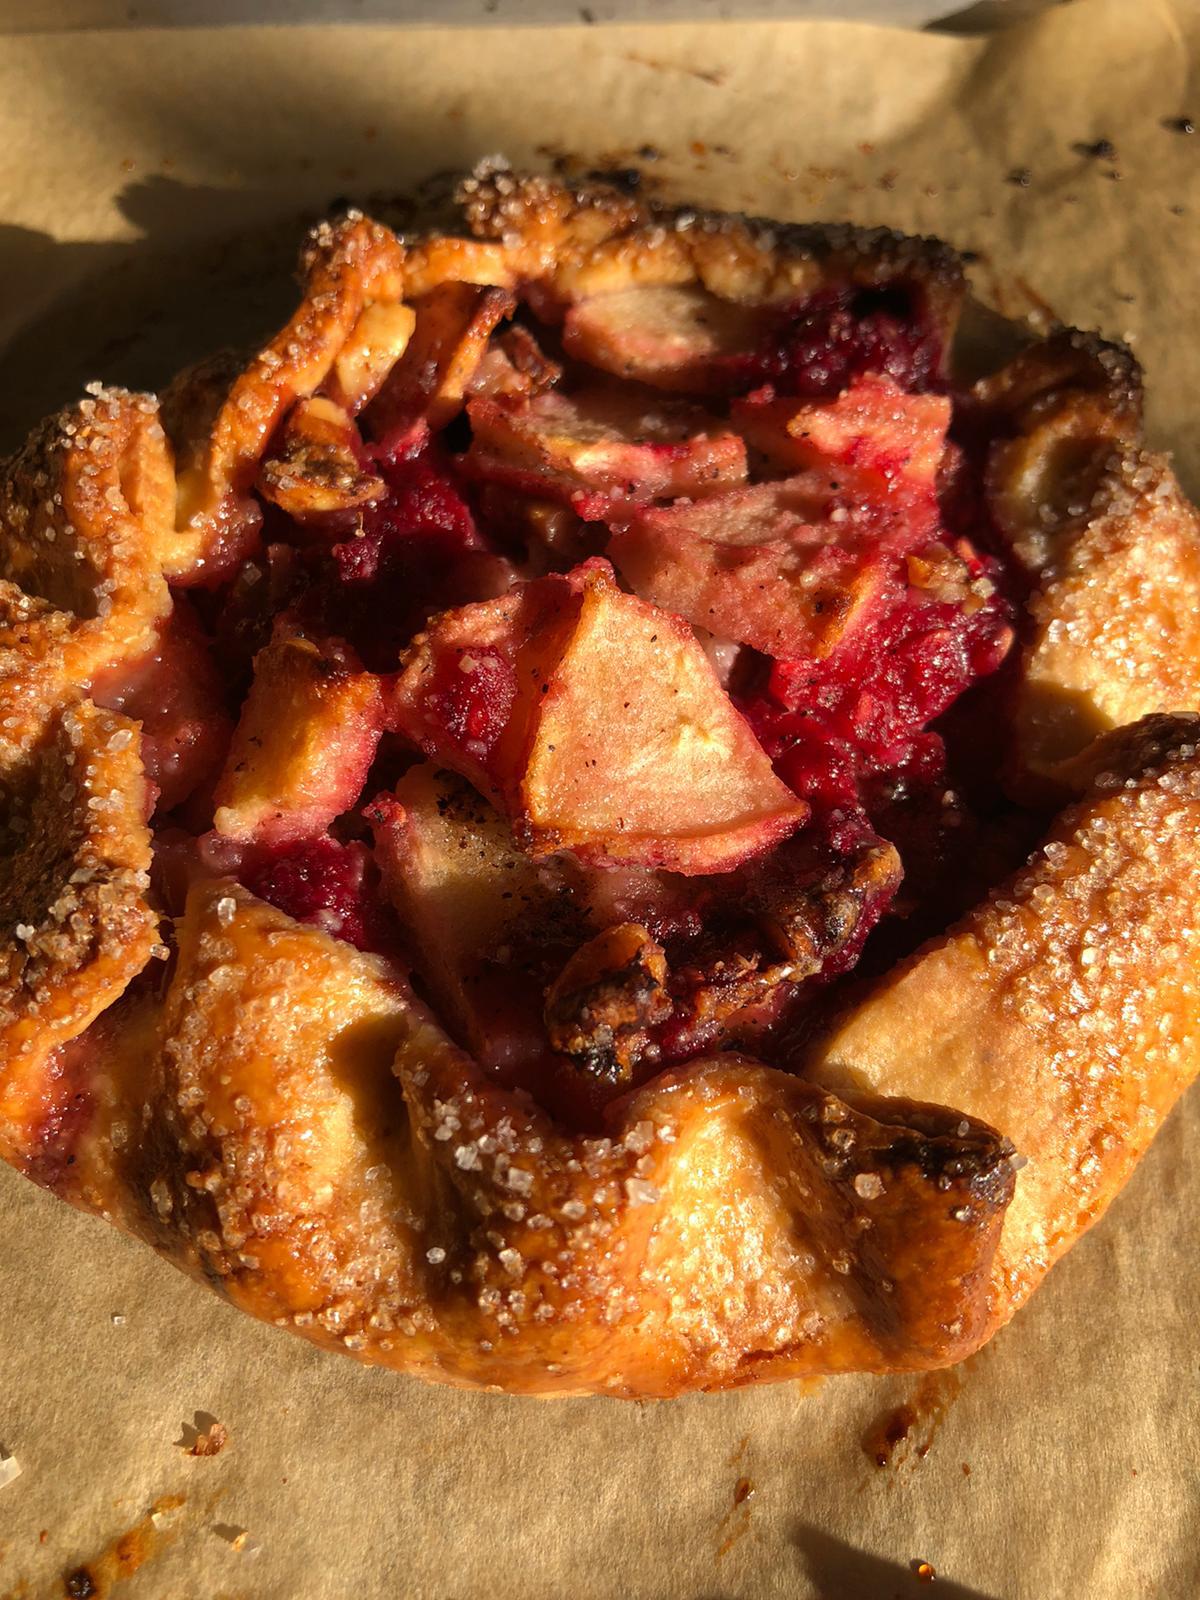 Apple, raspberry and walnut tart, a recipe by Tom Rees